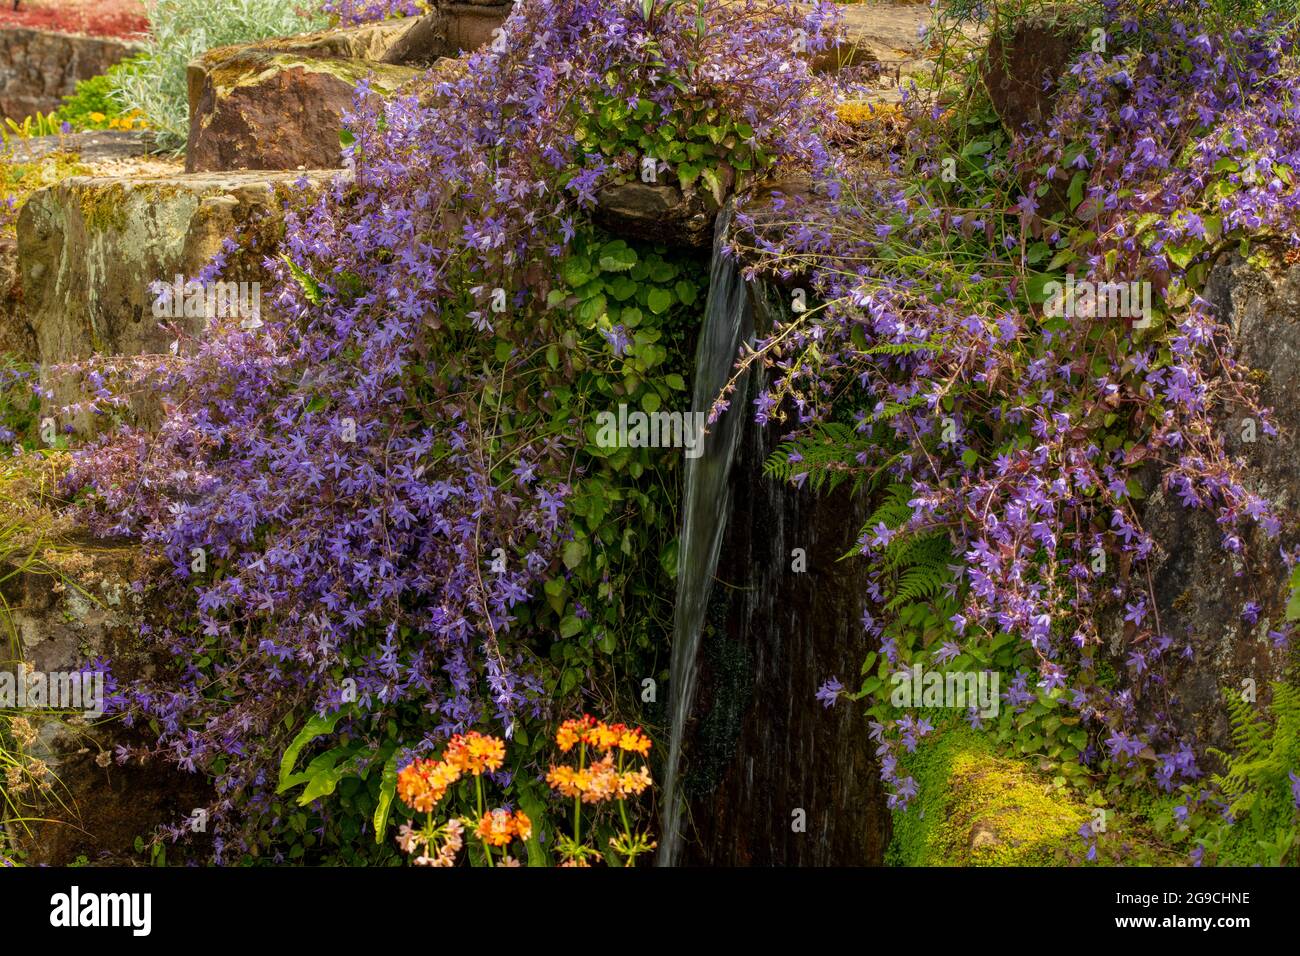 Campanula Poscharskyana, trailing bellflower, surrounding a small waterfall in a garden setting Stock Photo